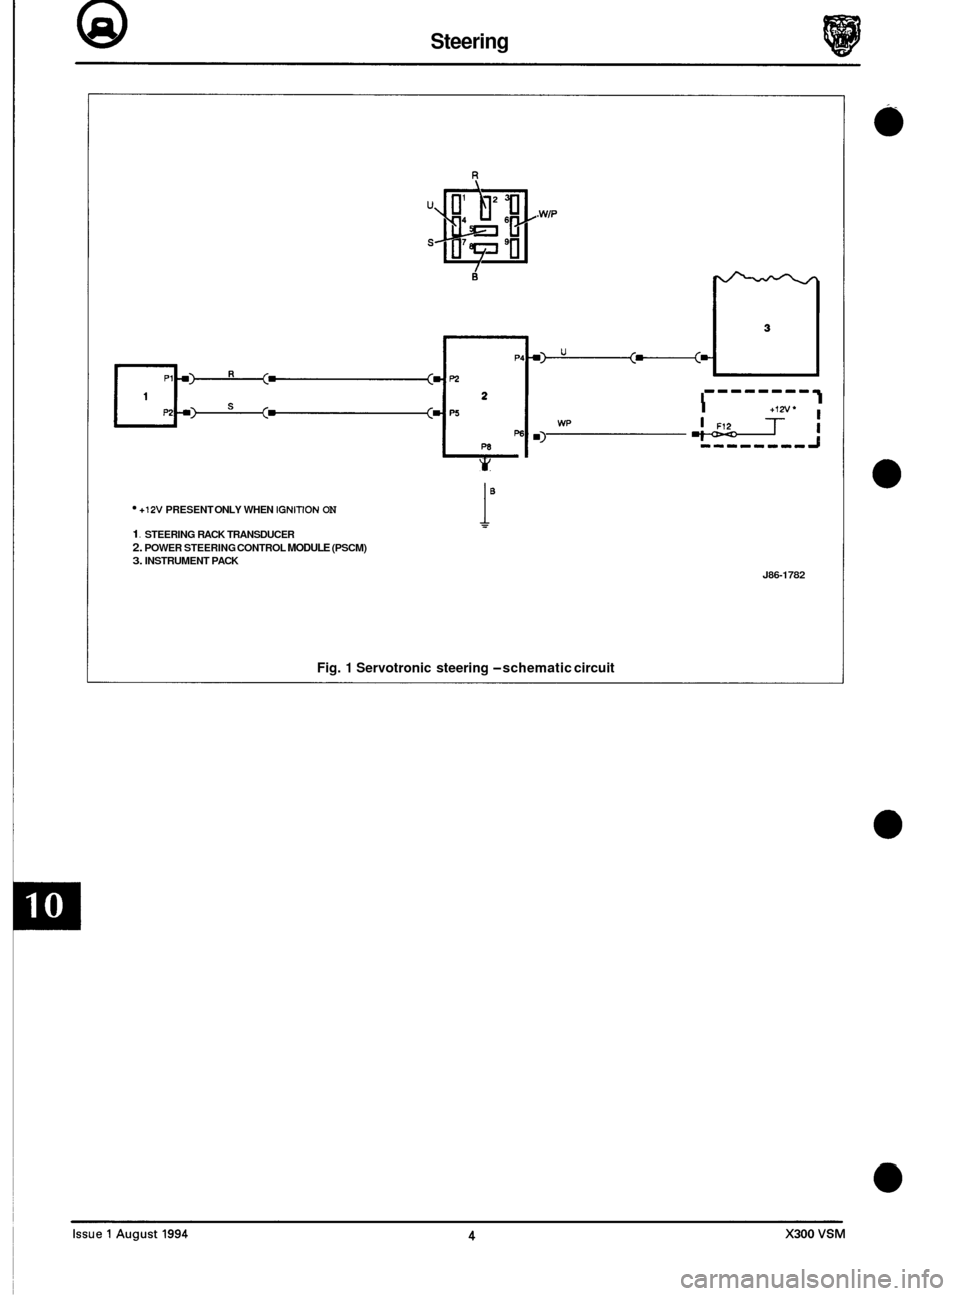 JAGUAR XJ6 1994 2.G Electrical Diagnostic Manual @ Steering 
R 
. WIP 
+ Y 
1- -------q I I +I" I 
*Ti m) wp I 
+12V PRESENT ONLY WHEN IGNITION ON 
1. STEERING  RACK TRANSDUCER 2. POWER  STEERING  CONTROL MODULE (PSCM) 3. INSTRUMENT  PACK 
i" 
J86-1